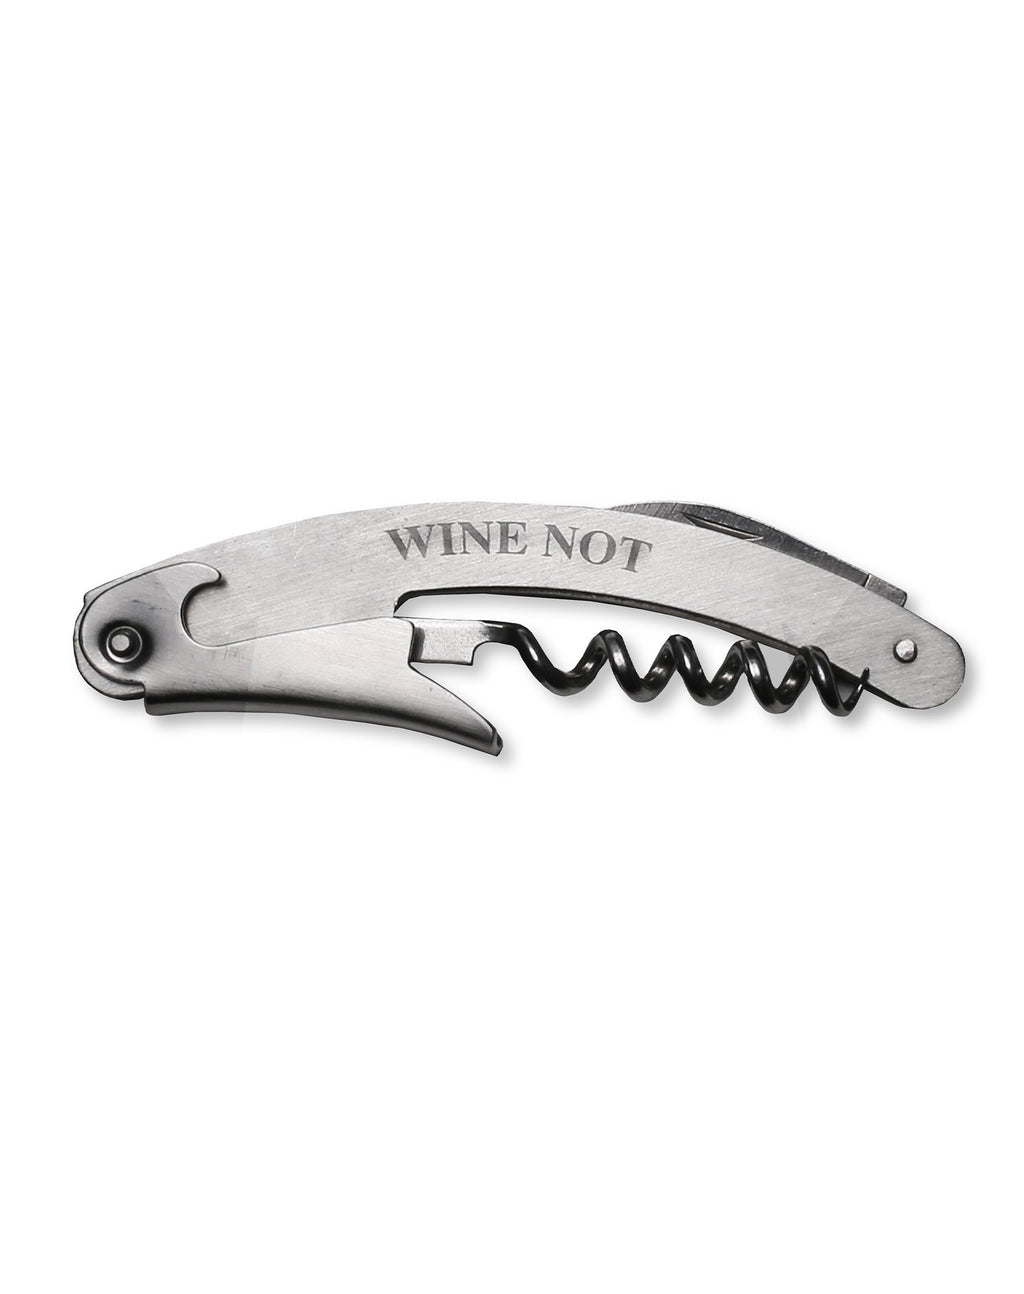 The "WINE NOT" Corkscrew | Silver - BTL